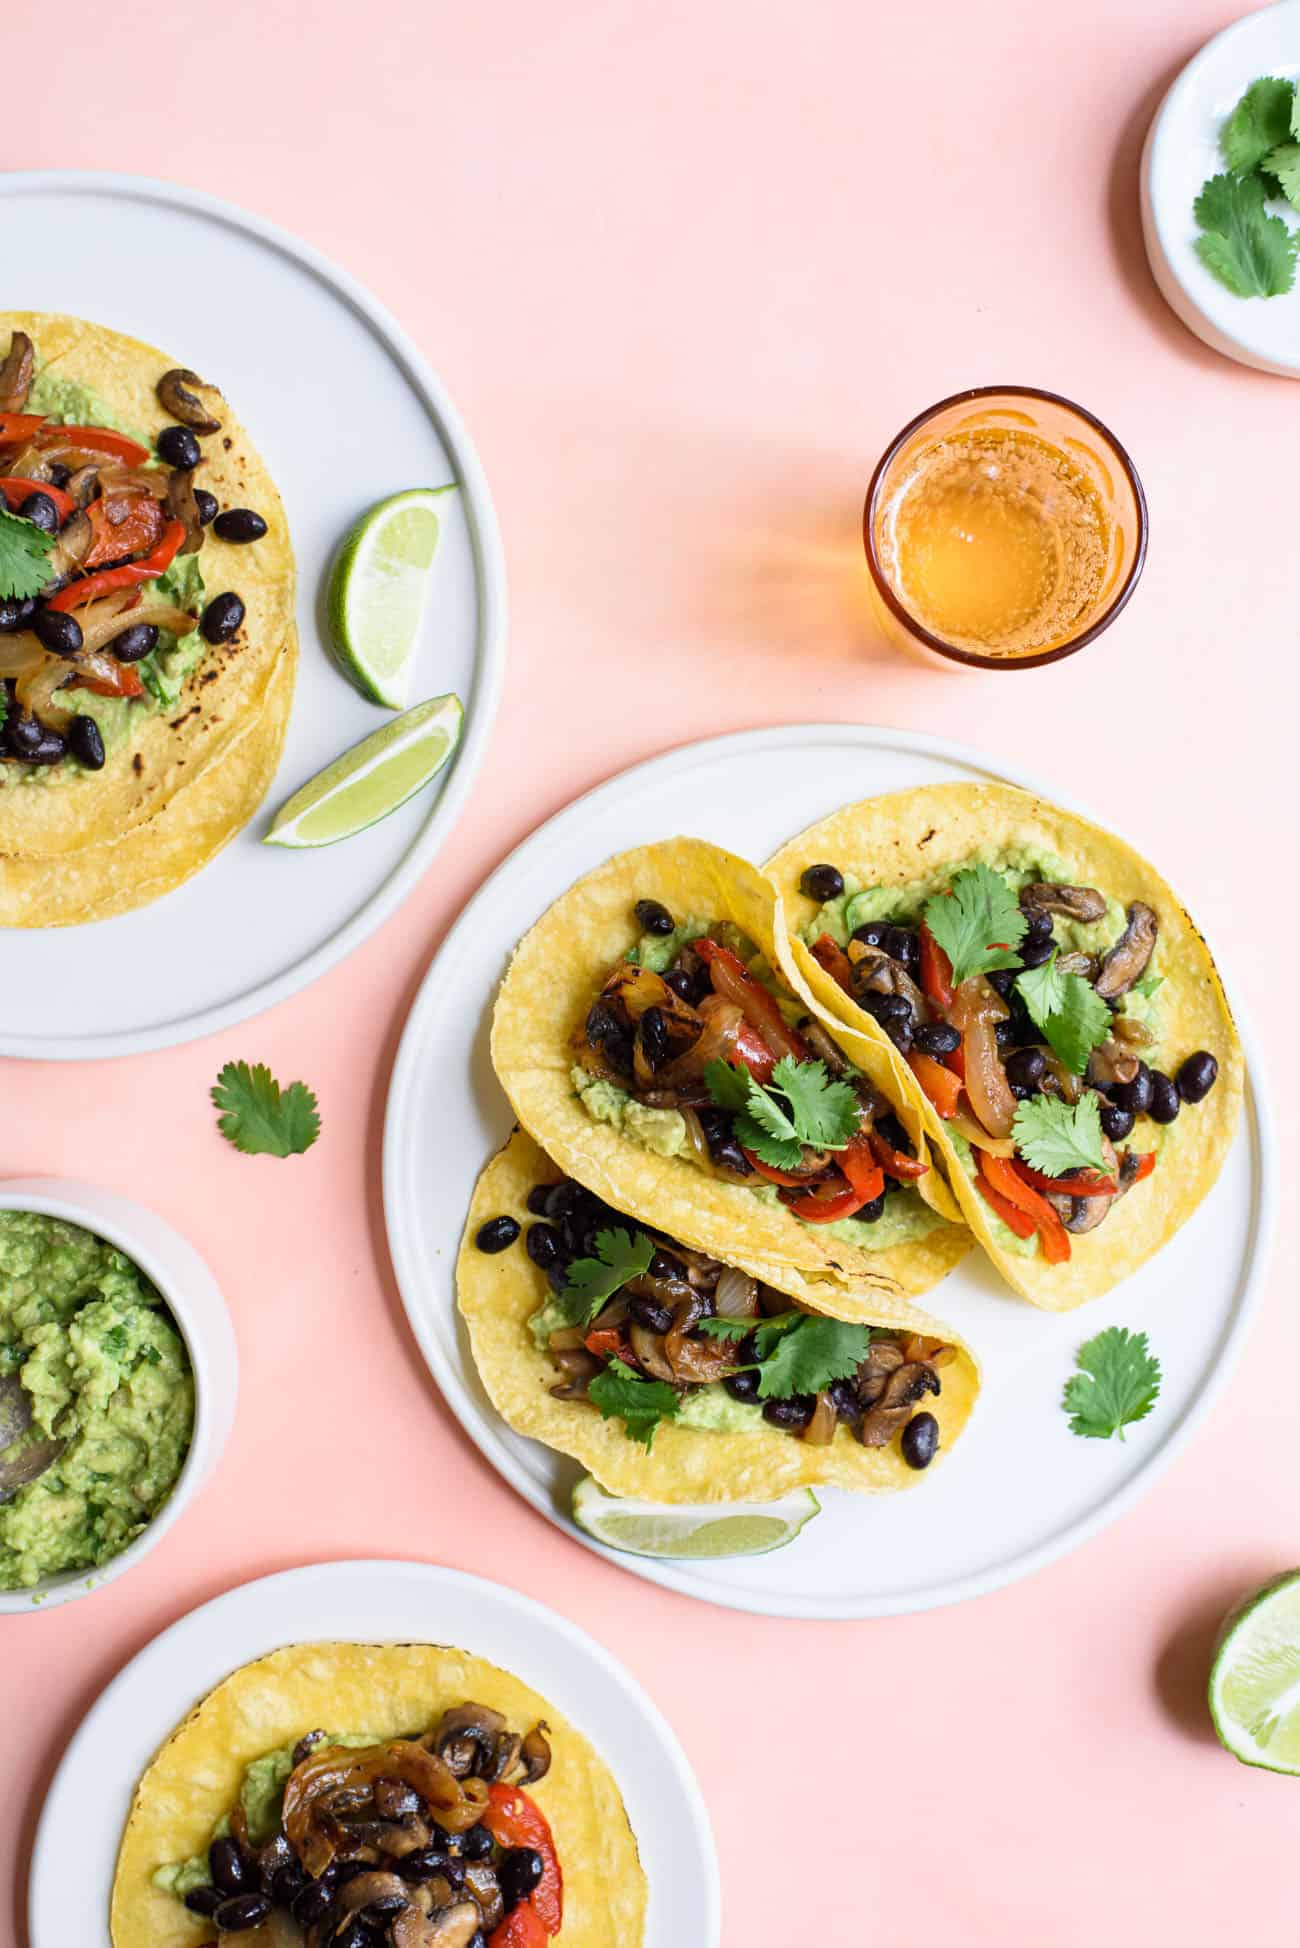 Easy Vegan Tacos with Black Beans, Fajita Veggies and Guacamole